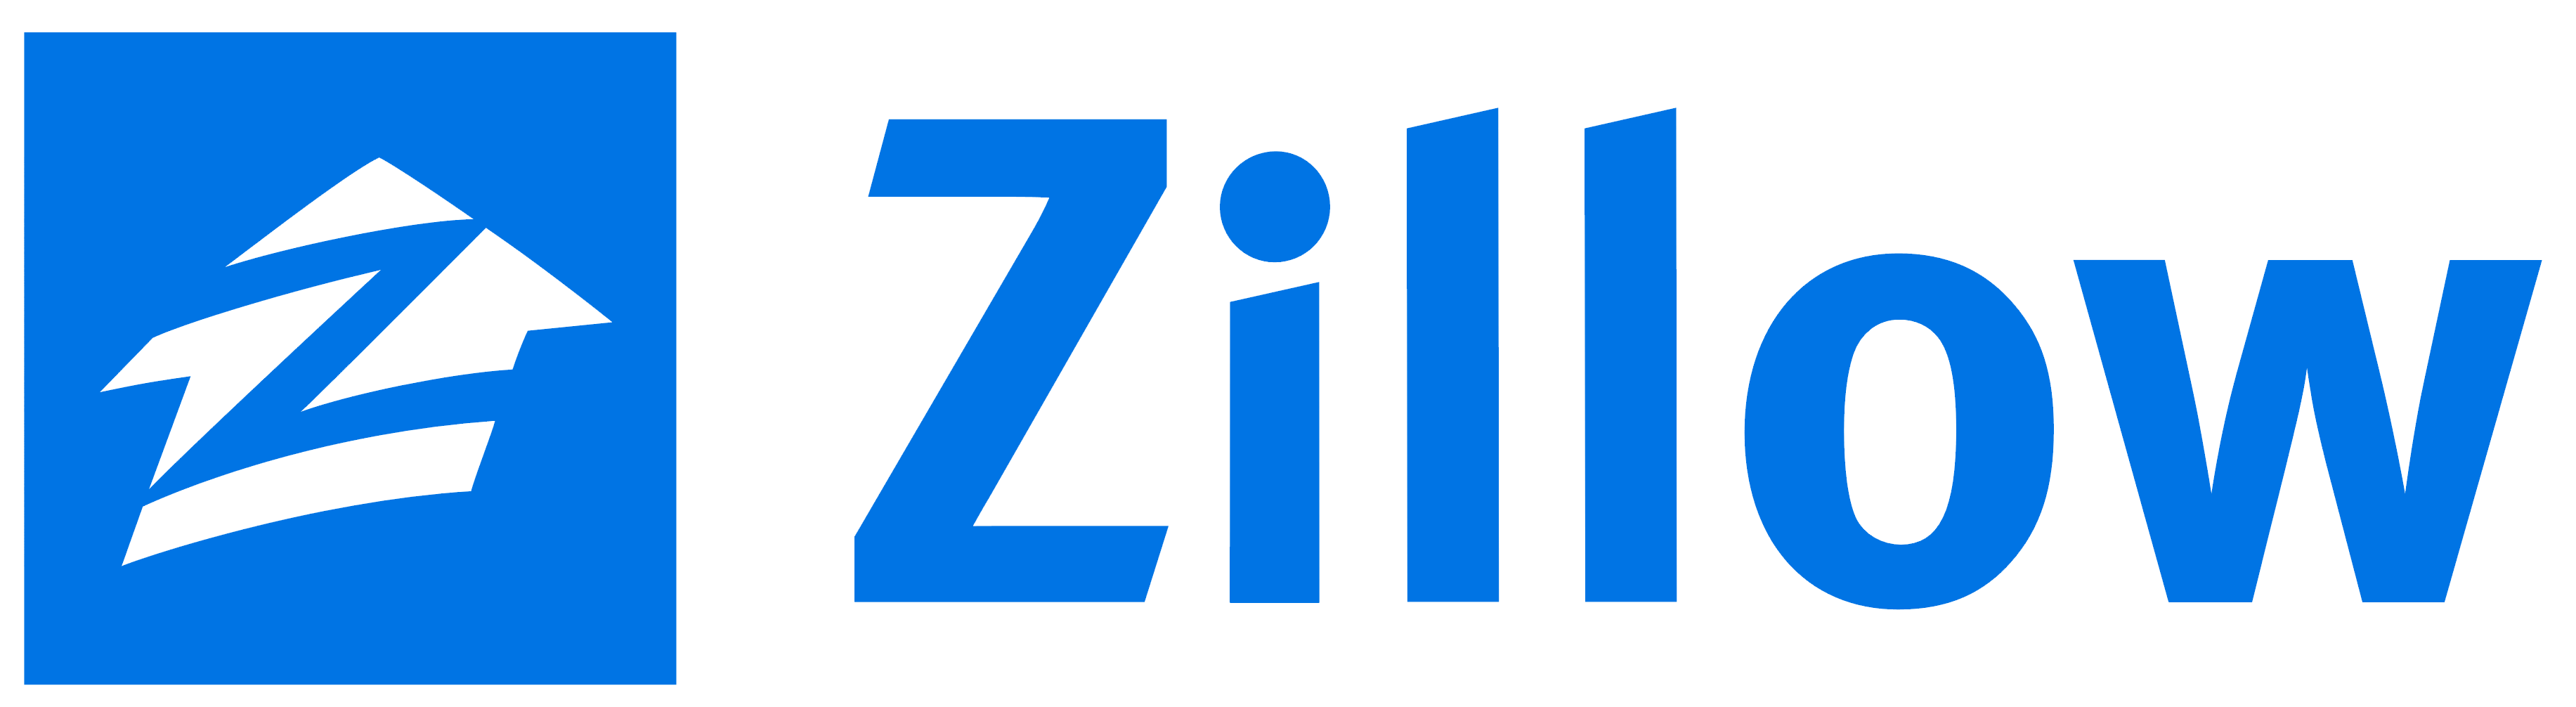 Zillow Transparent Logo - Zillow (zillow.com) – Logos Download